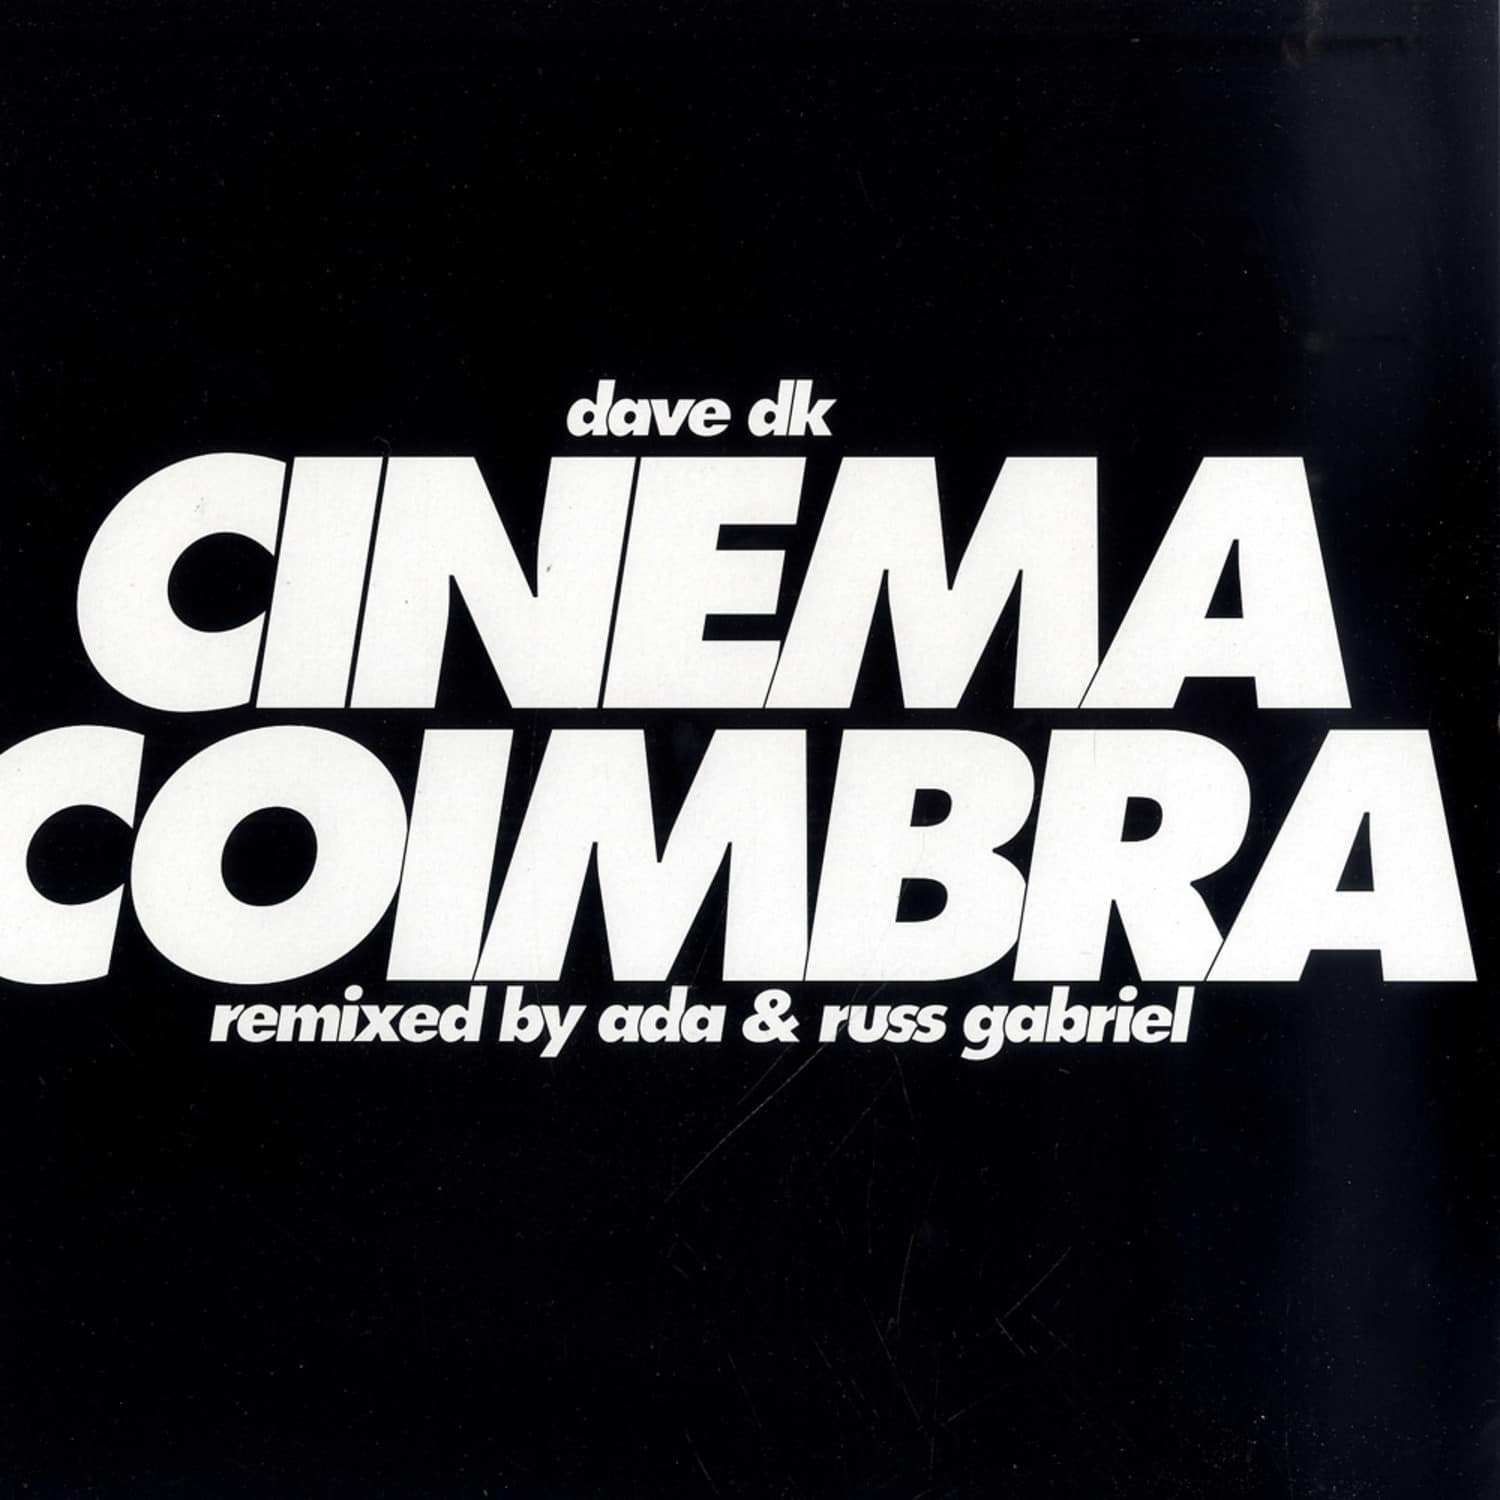 Dave DK - CINEMA COIMBRA / ADA & RUSS GABRIEL RMXS